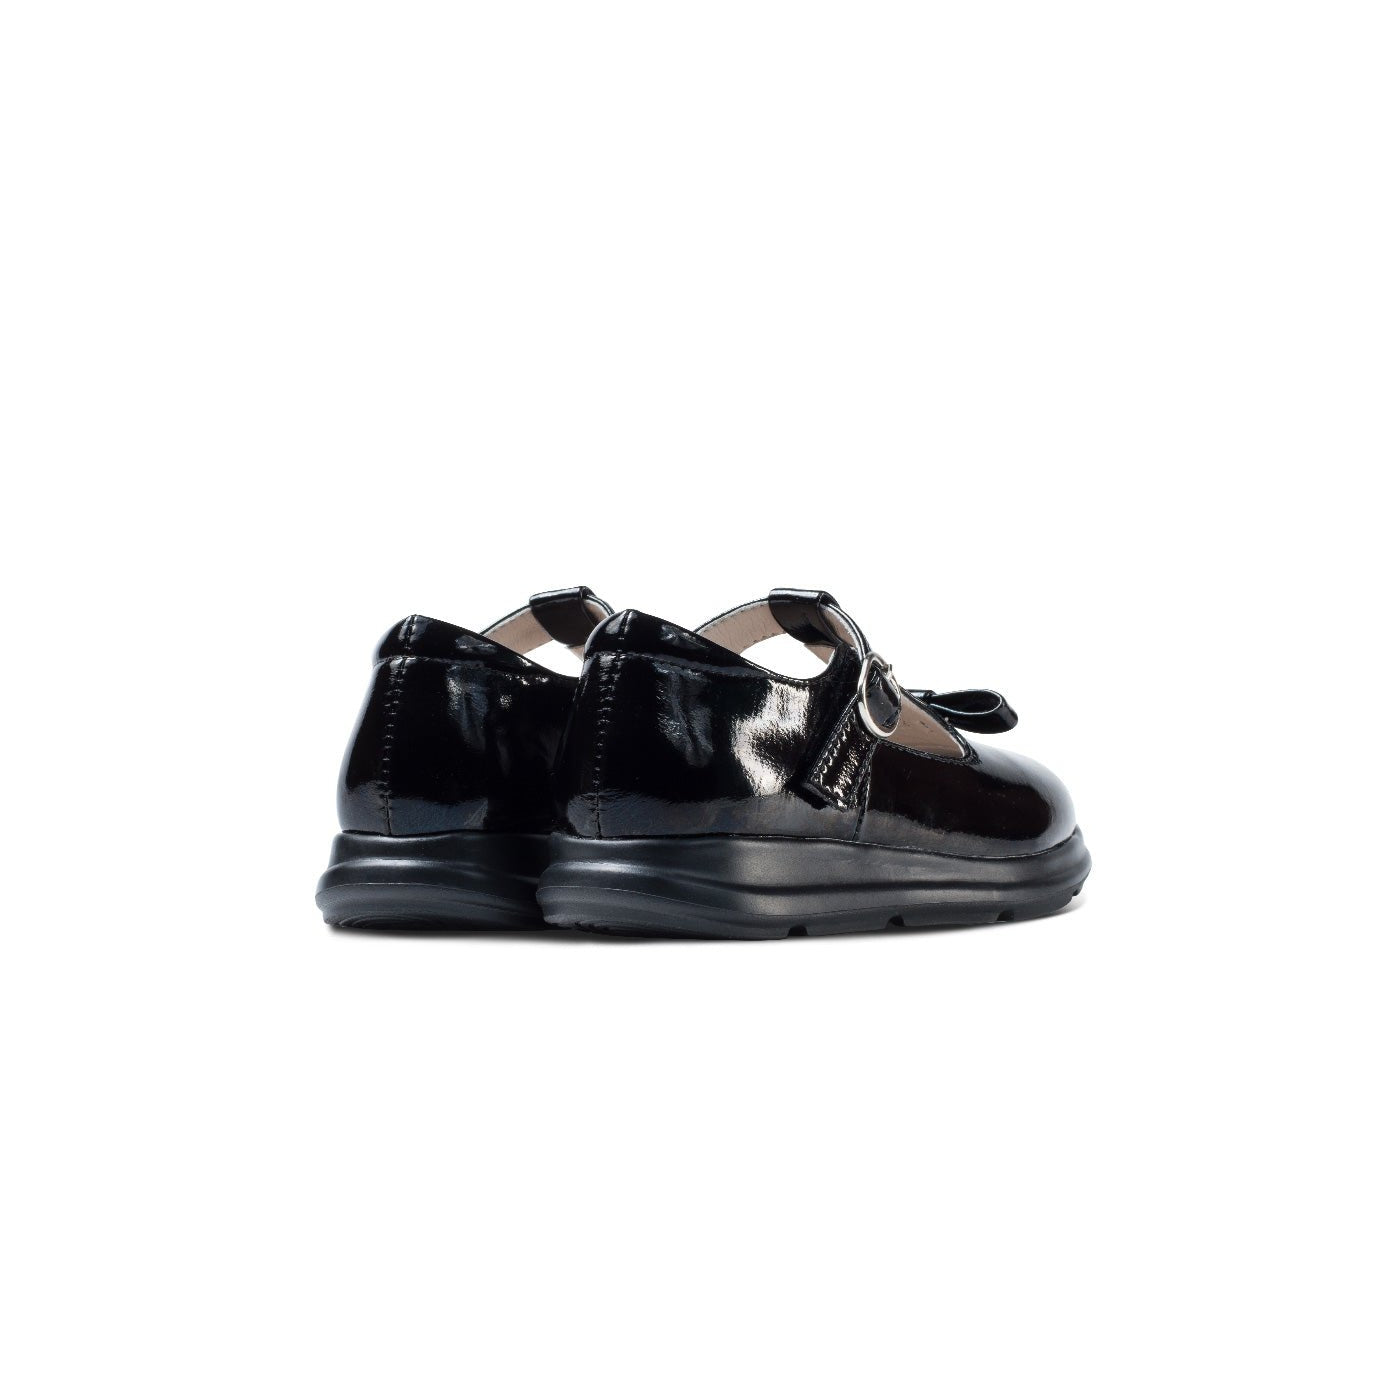 Ness Lightweight Soft Sole Girl Patent Black School Shoes - 0cm